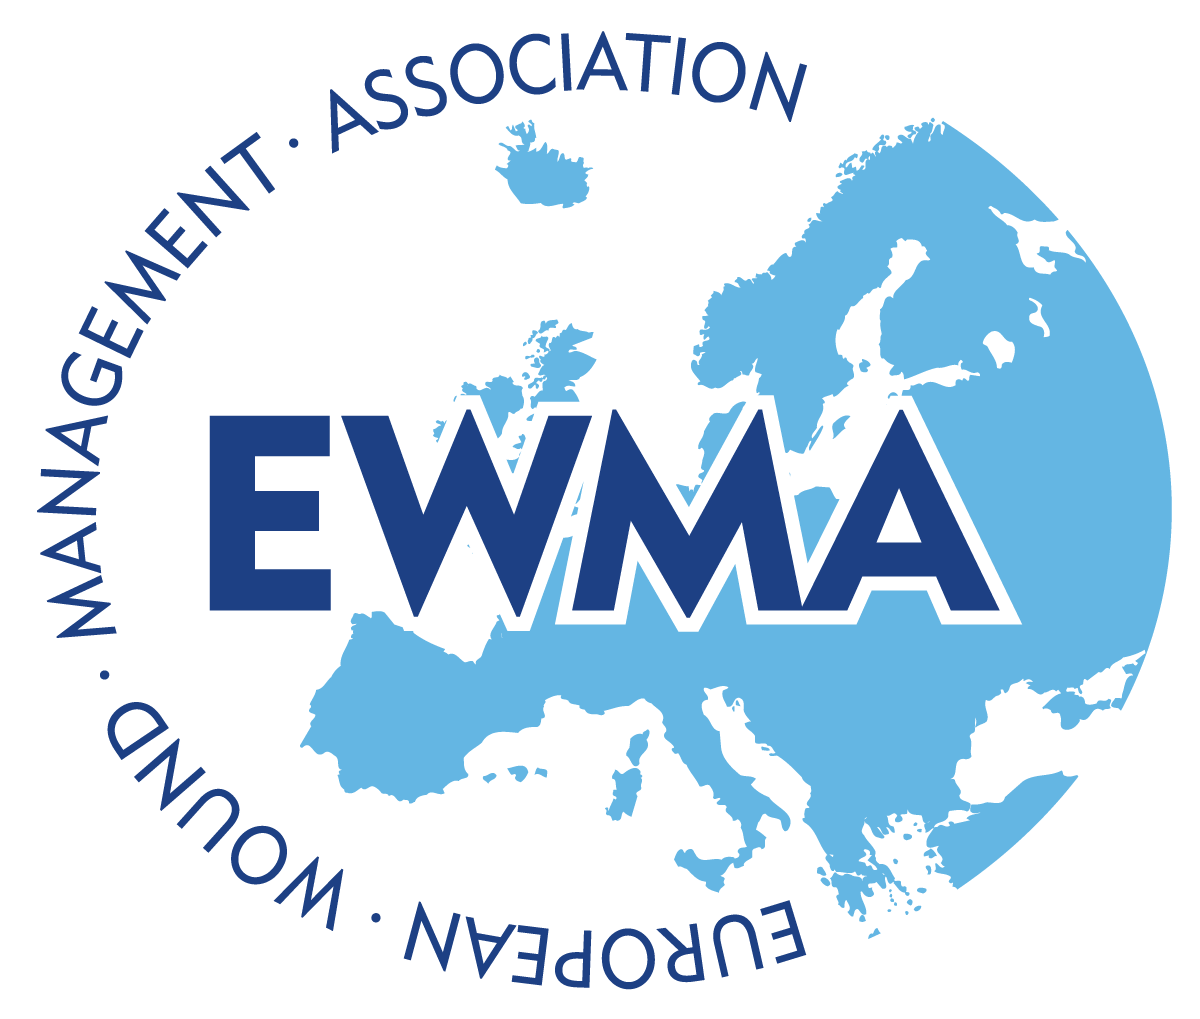 European Wound Management Association